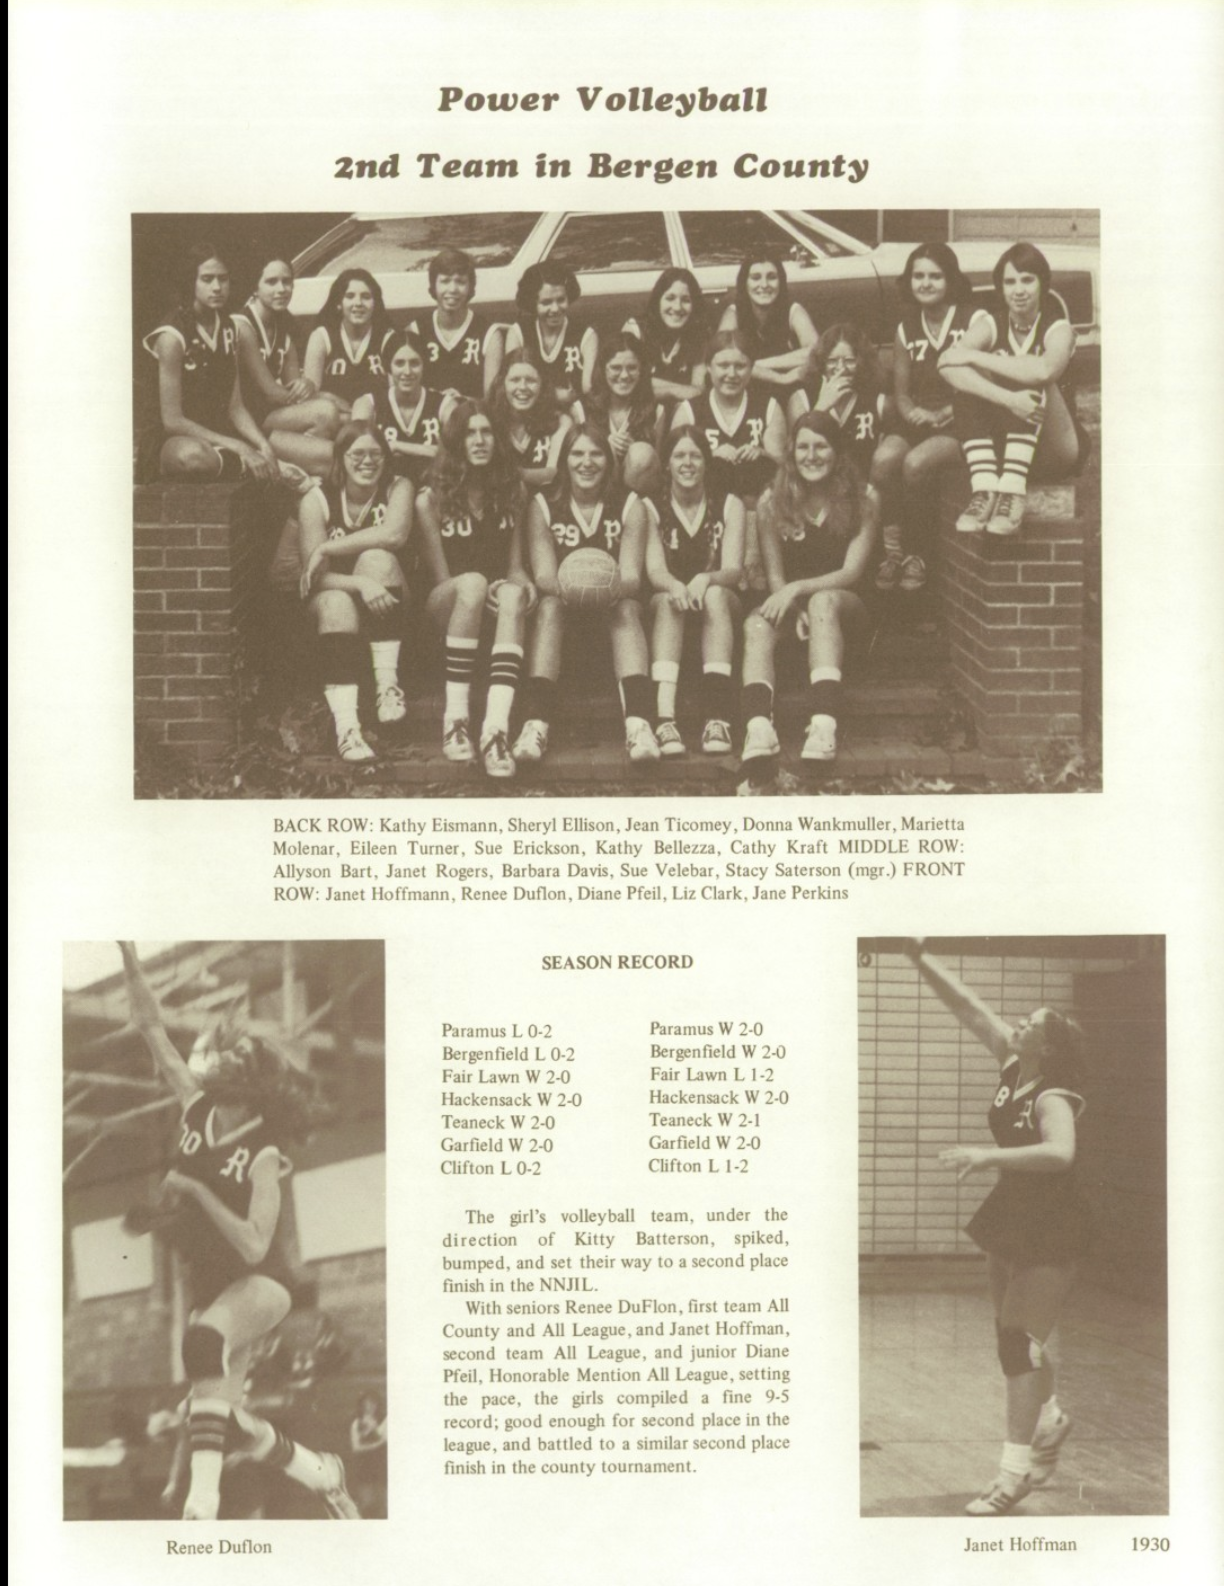 1976 Girls’ Volleyball Team